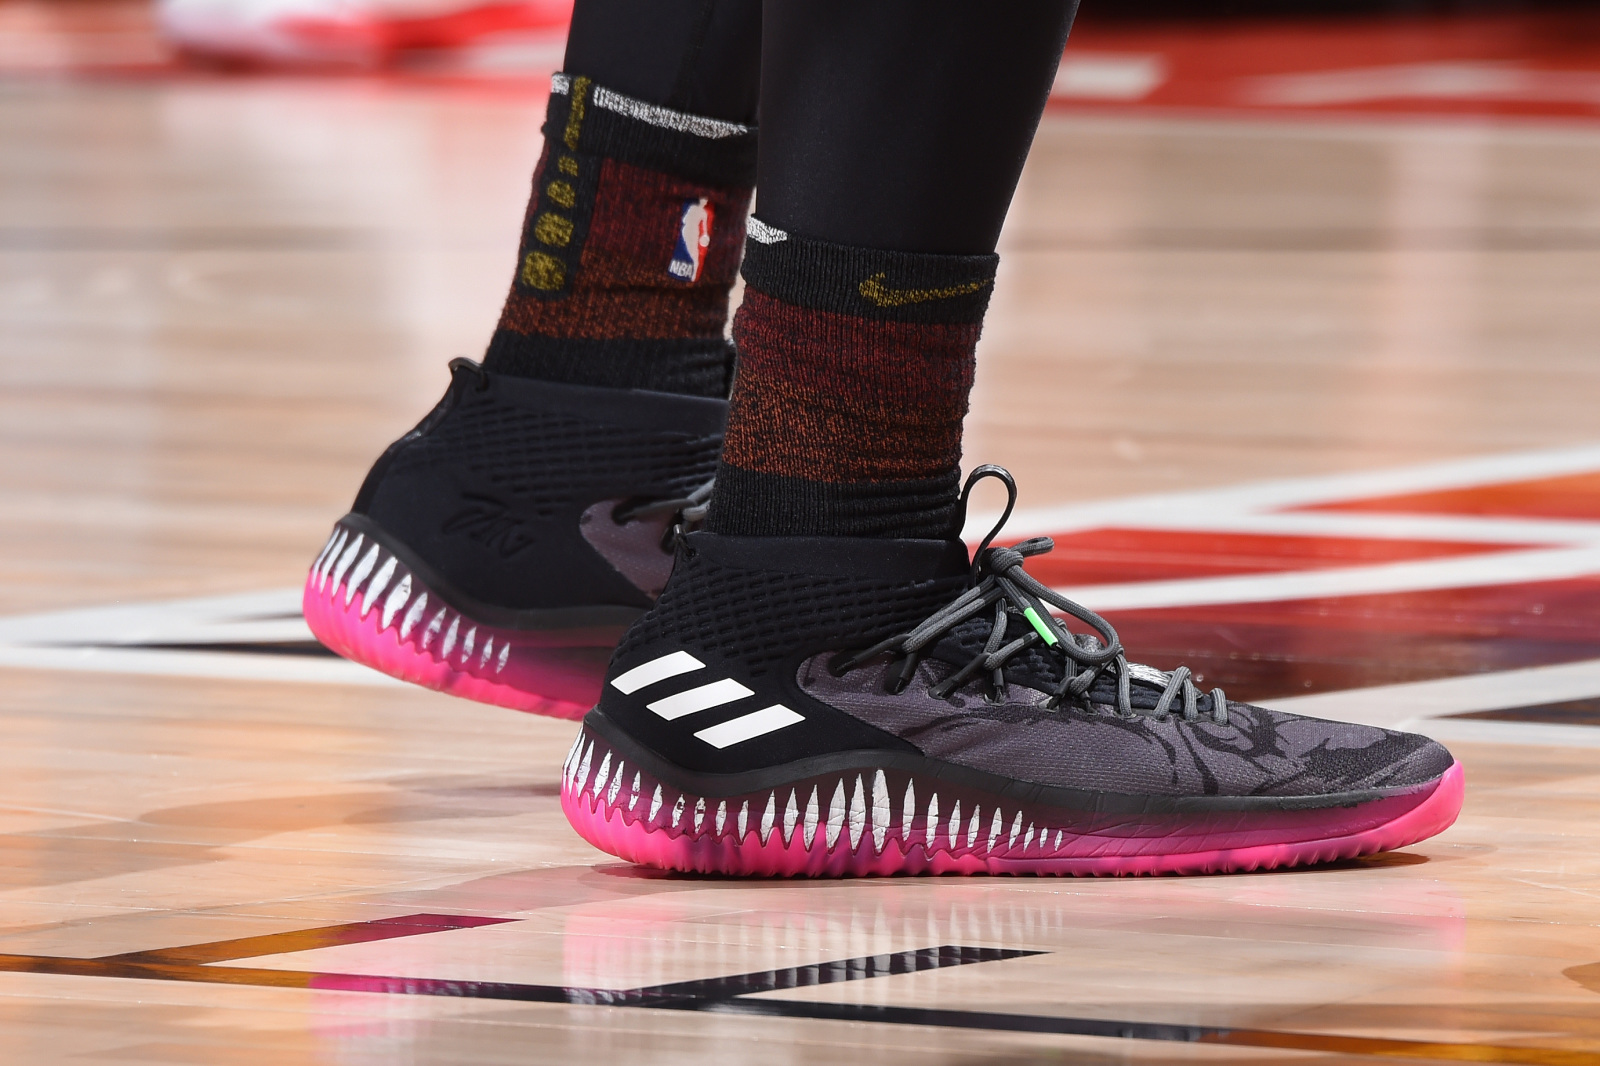 Utah Jazz: Donovan Mitchell sneakers revealed for sophomore season